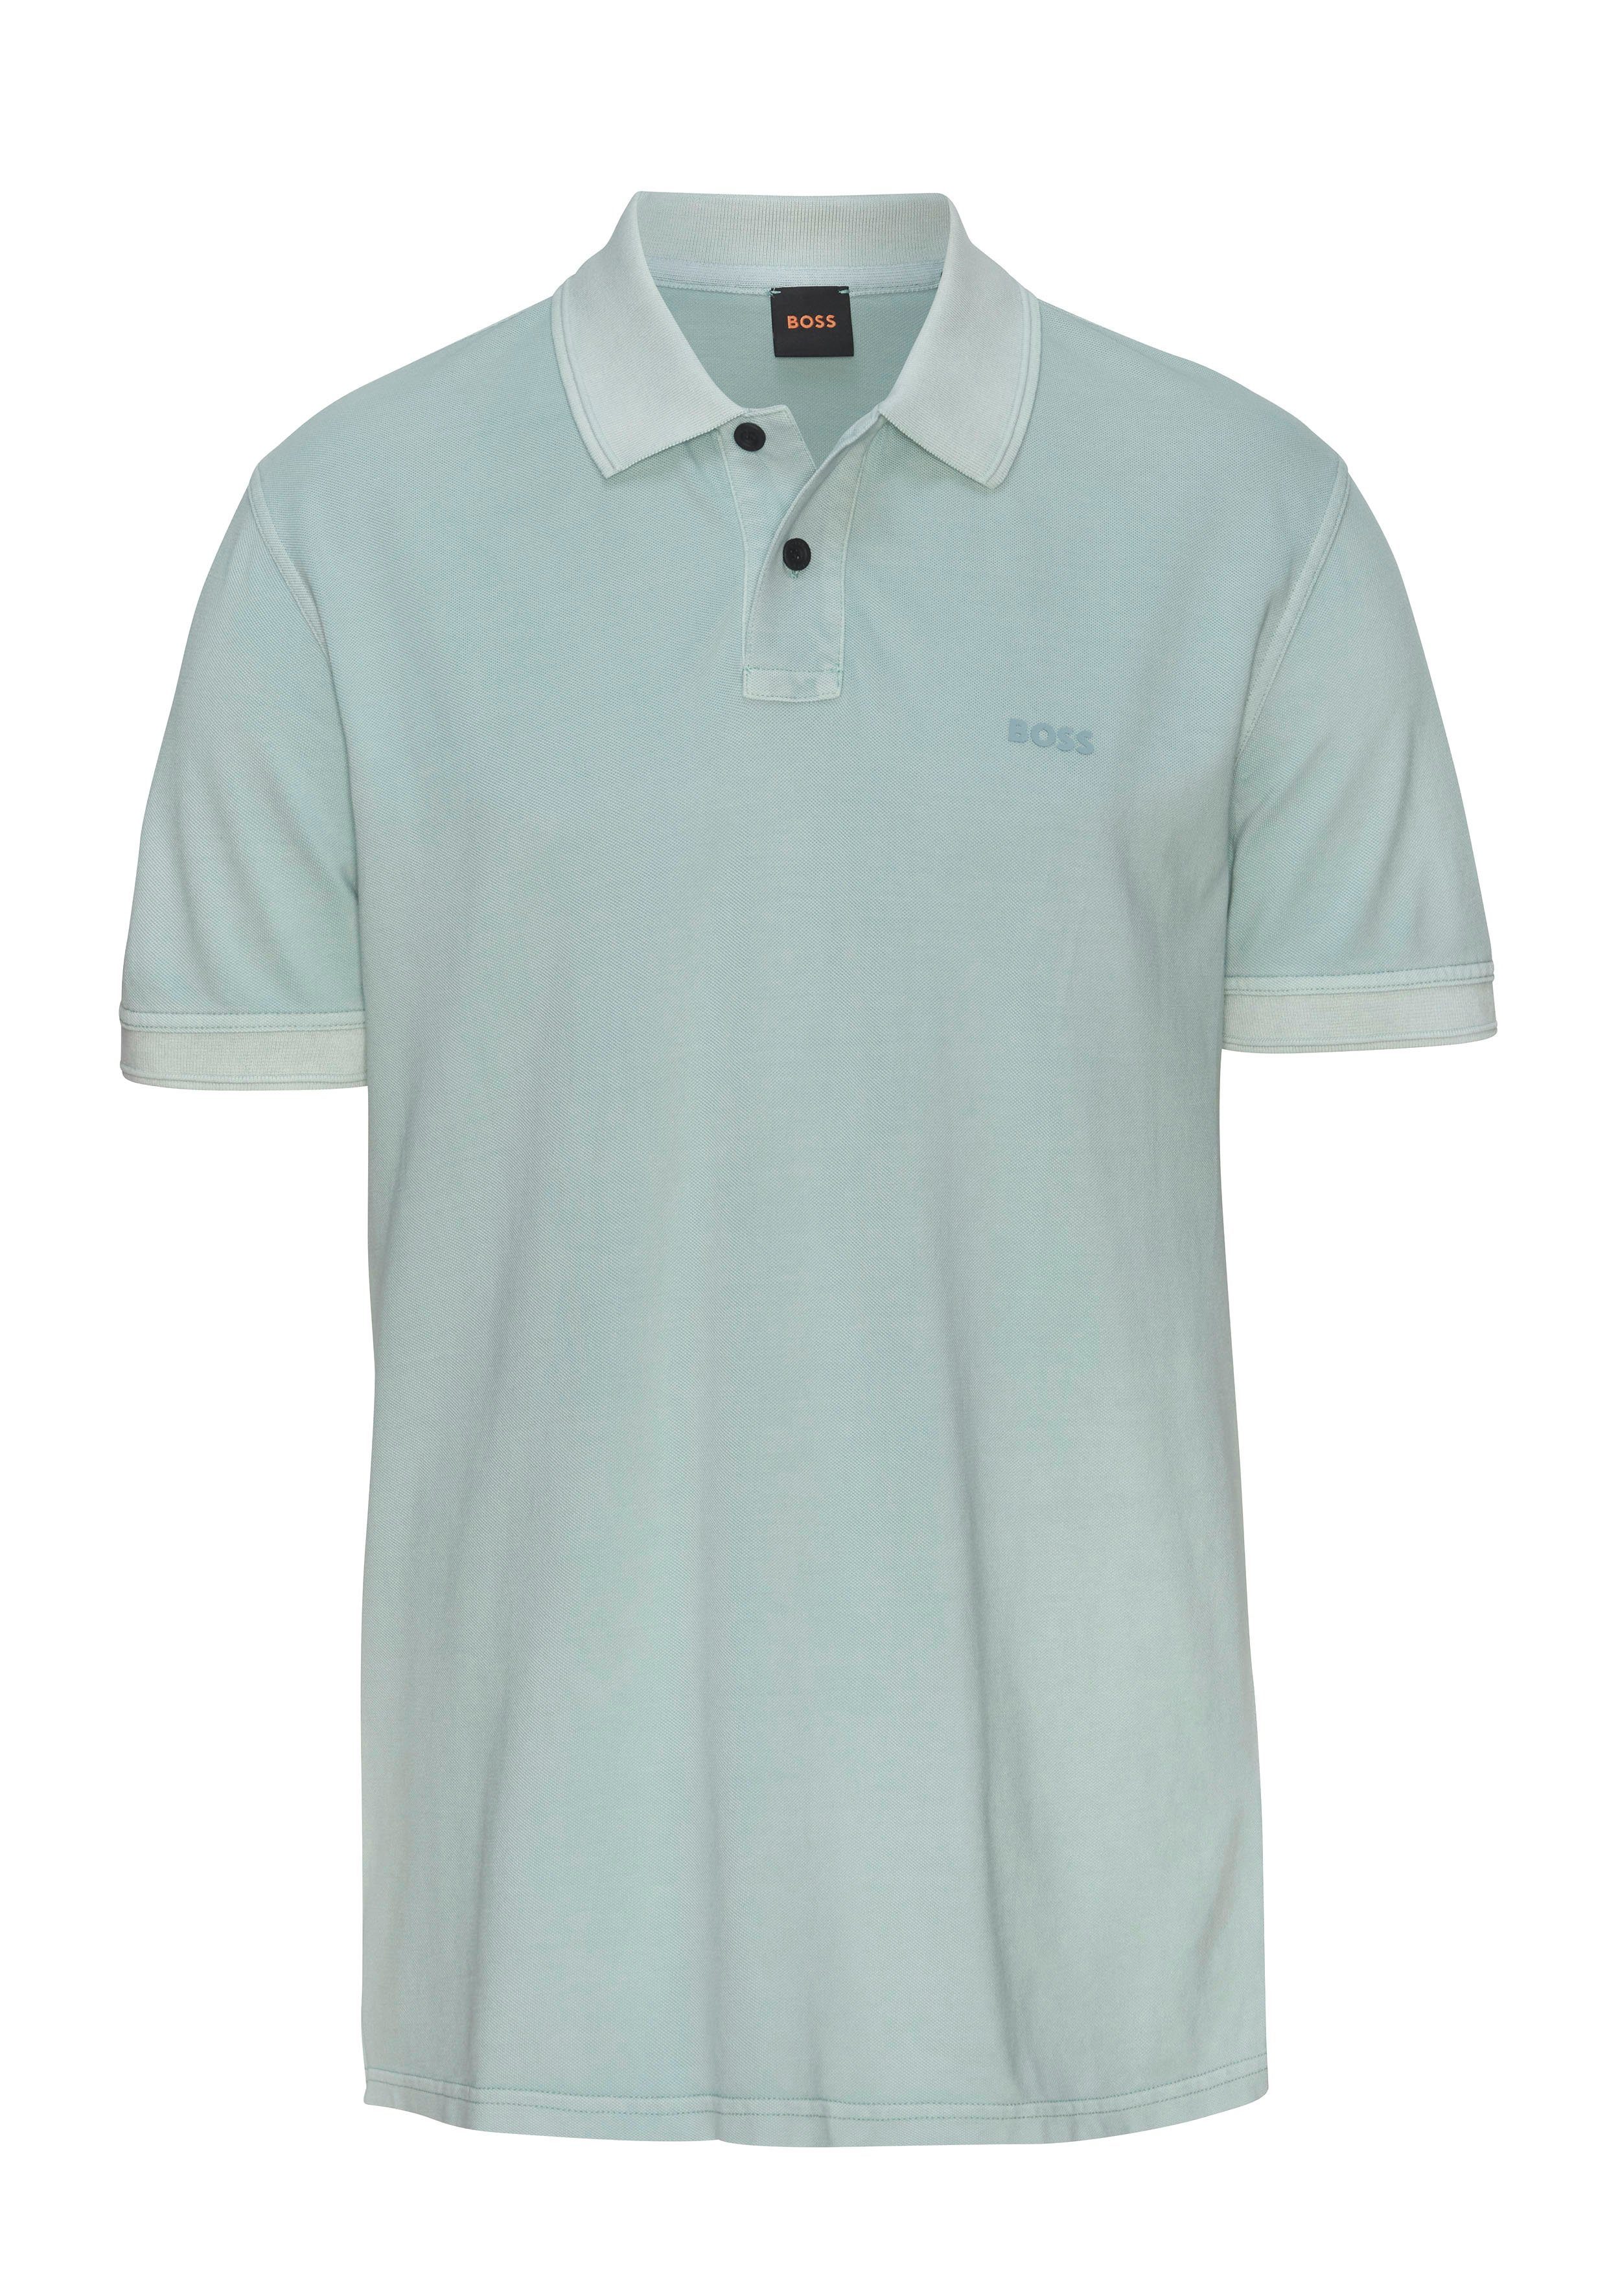 Extrem günstige Rabattpreise BOSS ORANGE Poloshirt Prime 446_Turquoise/Aqua mit Knopfleiste